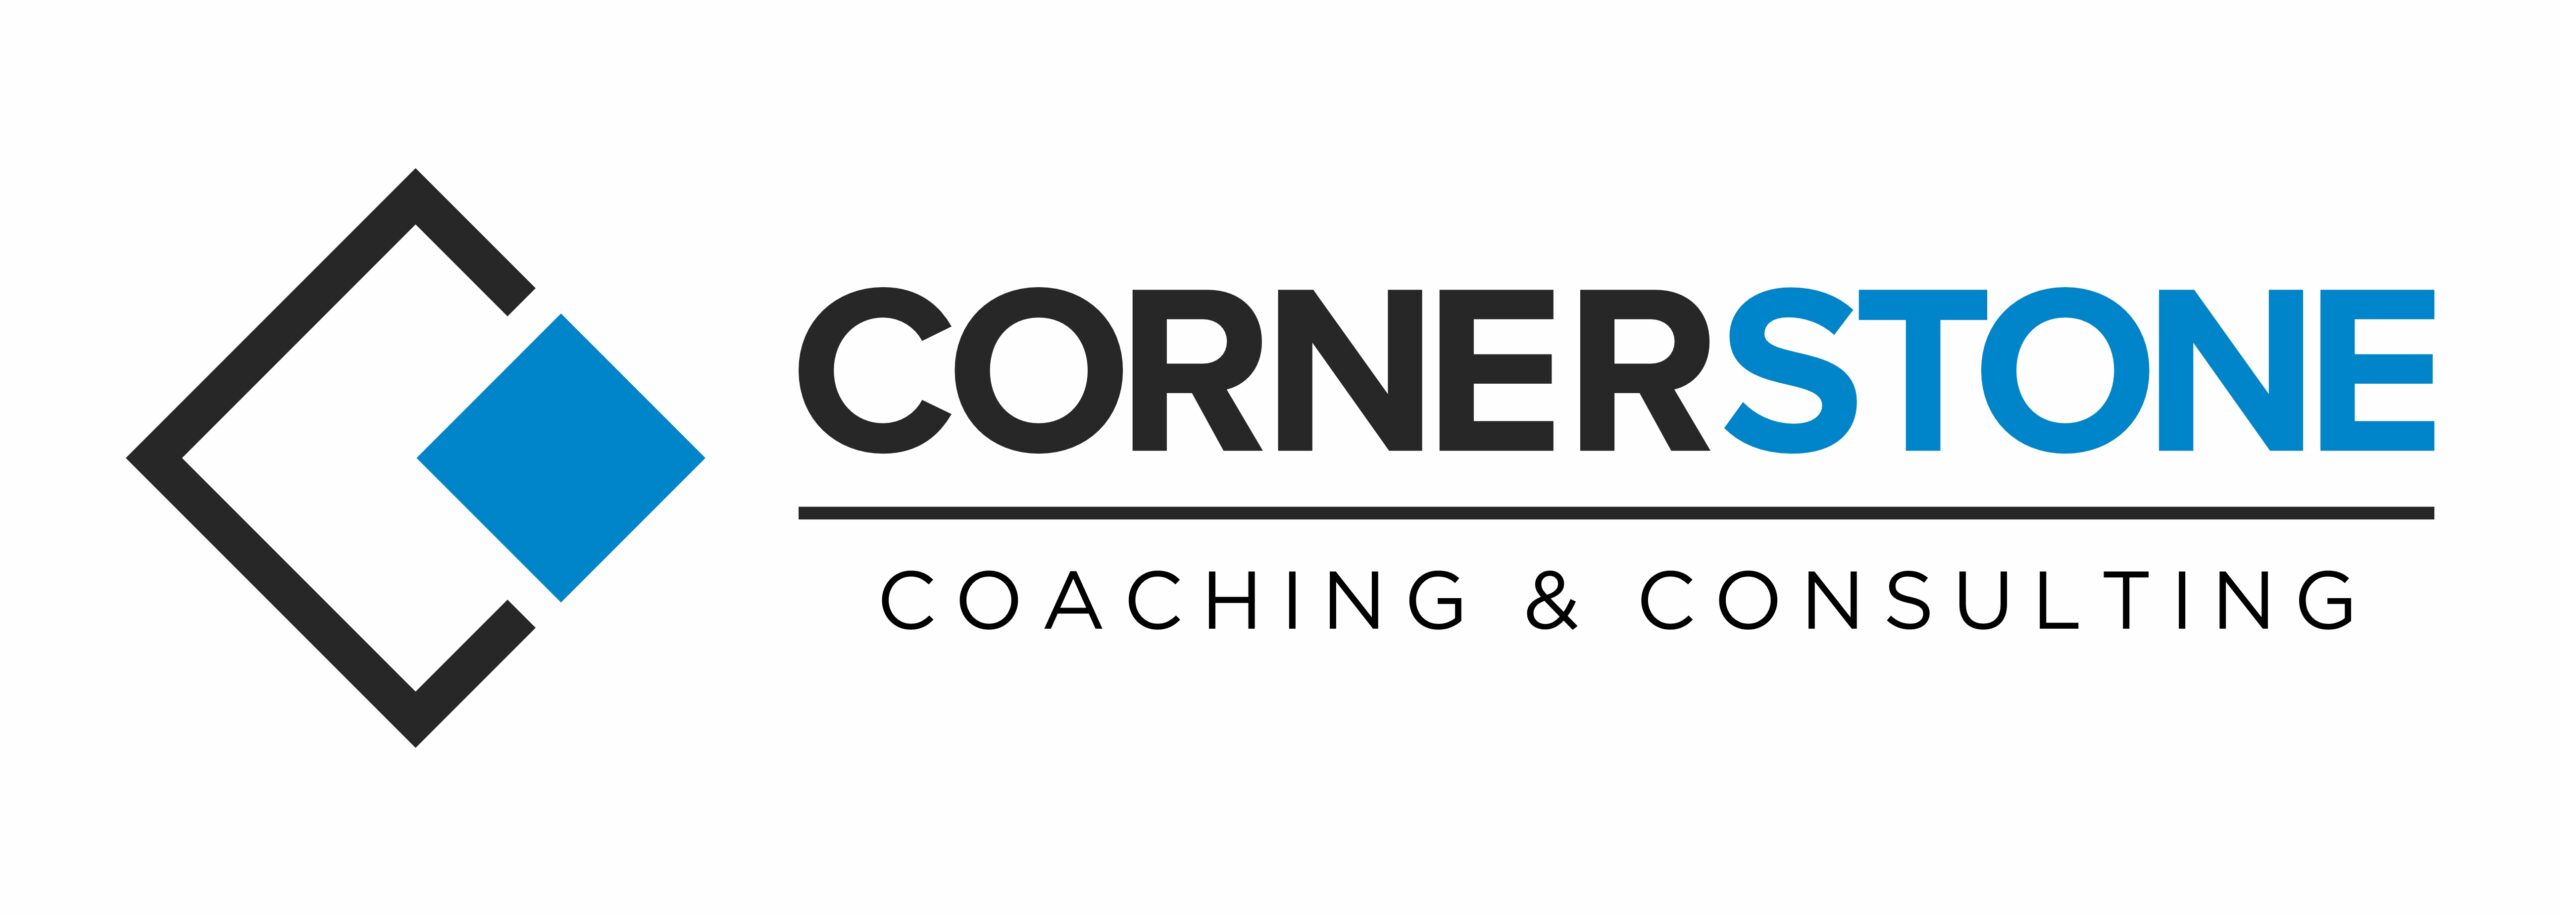 Cornerstone Coaching & Consulting